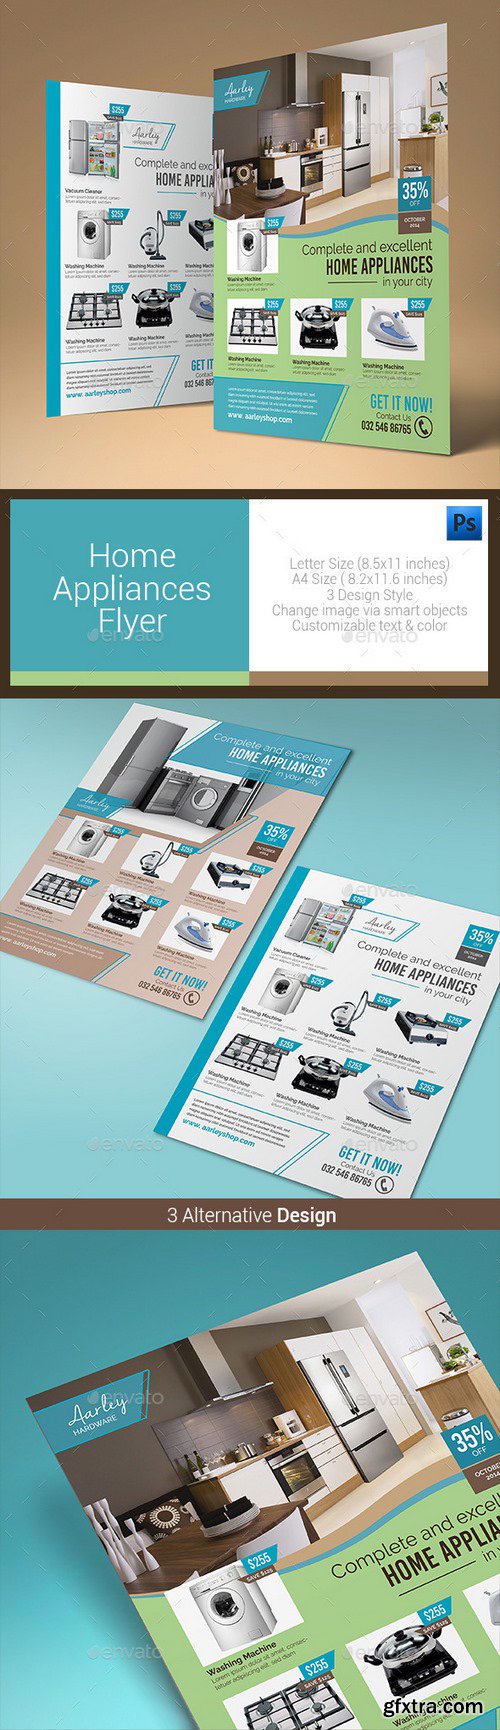 Graphicriver - Home Appliances Flyer 10583837